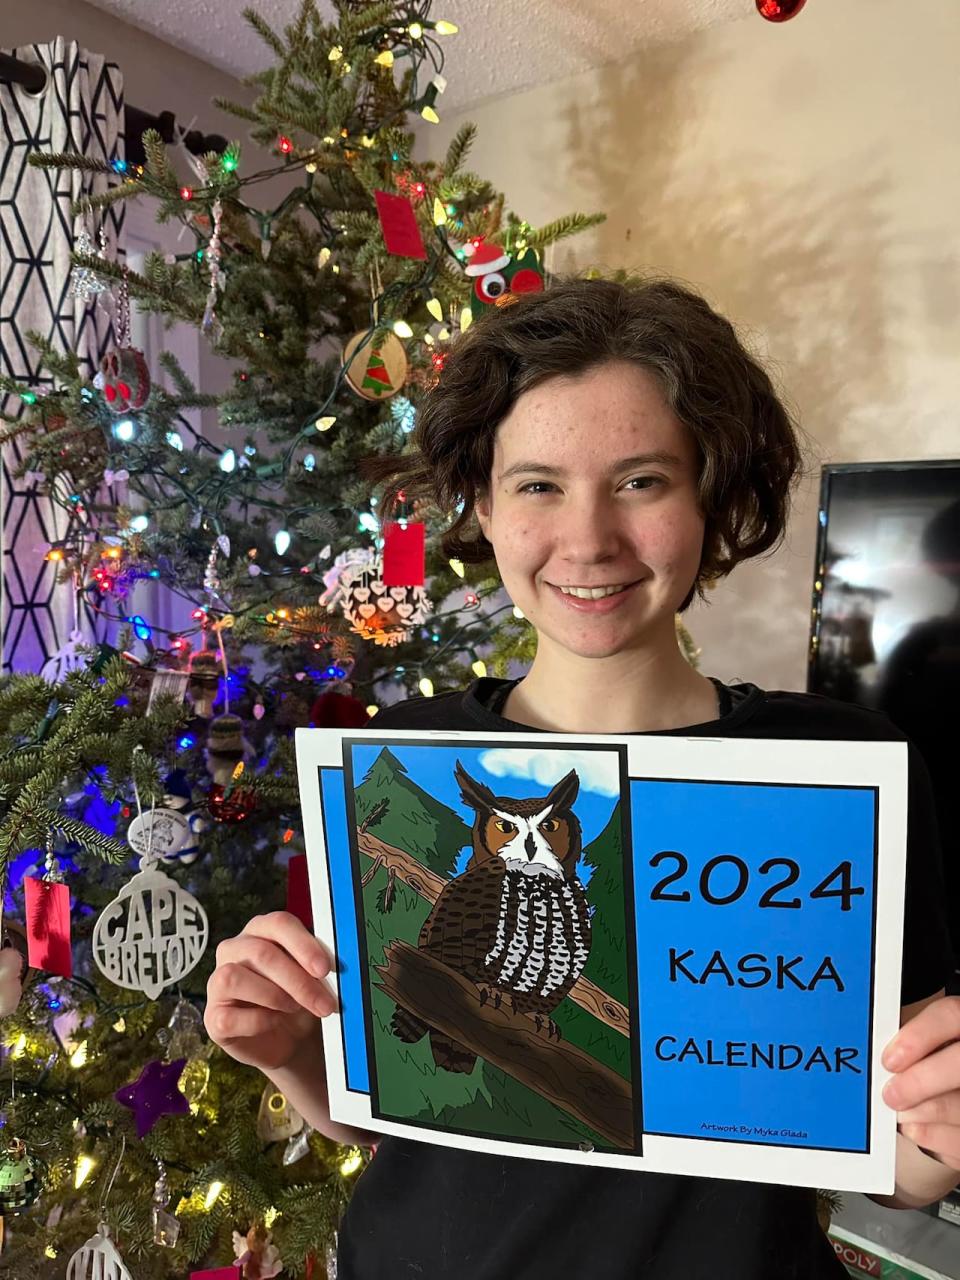 Myka Glada,17, holding the calendar she created.